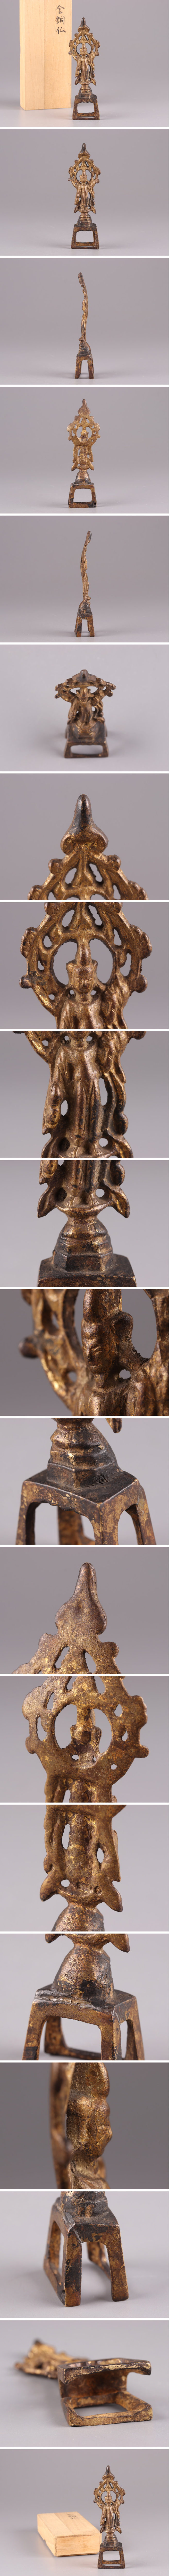 送料無料人気中国古玩 唐物 仏教美術 古銅造 鍍金 仏像 置物 時代物 極上品 初だし品 3799 その他